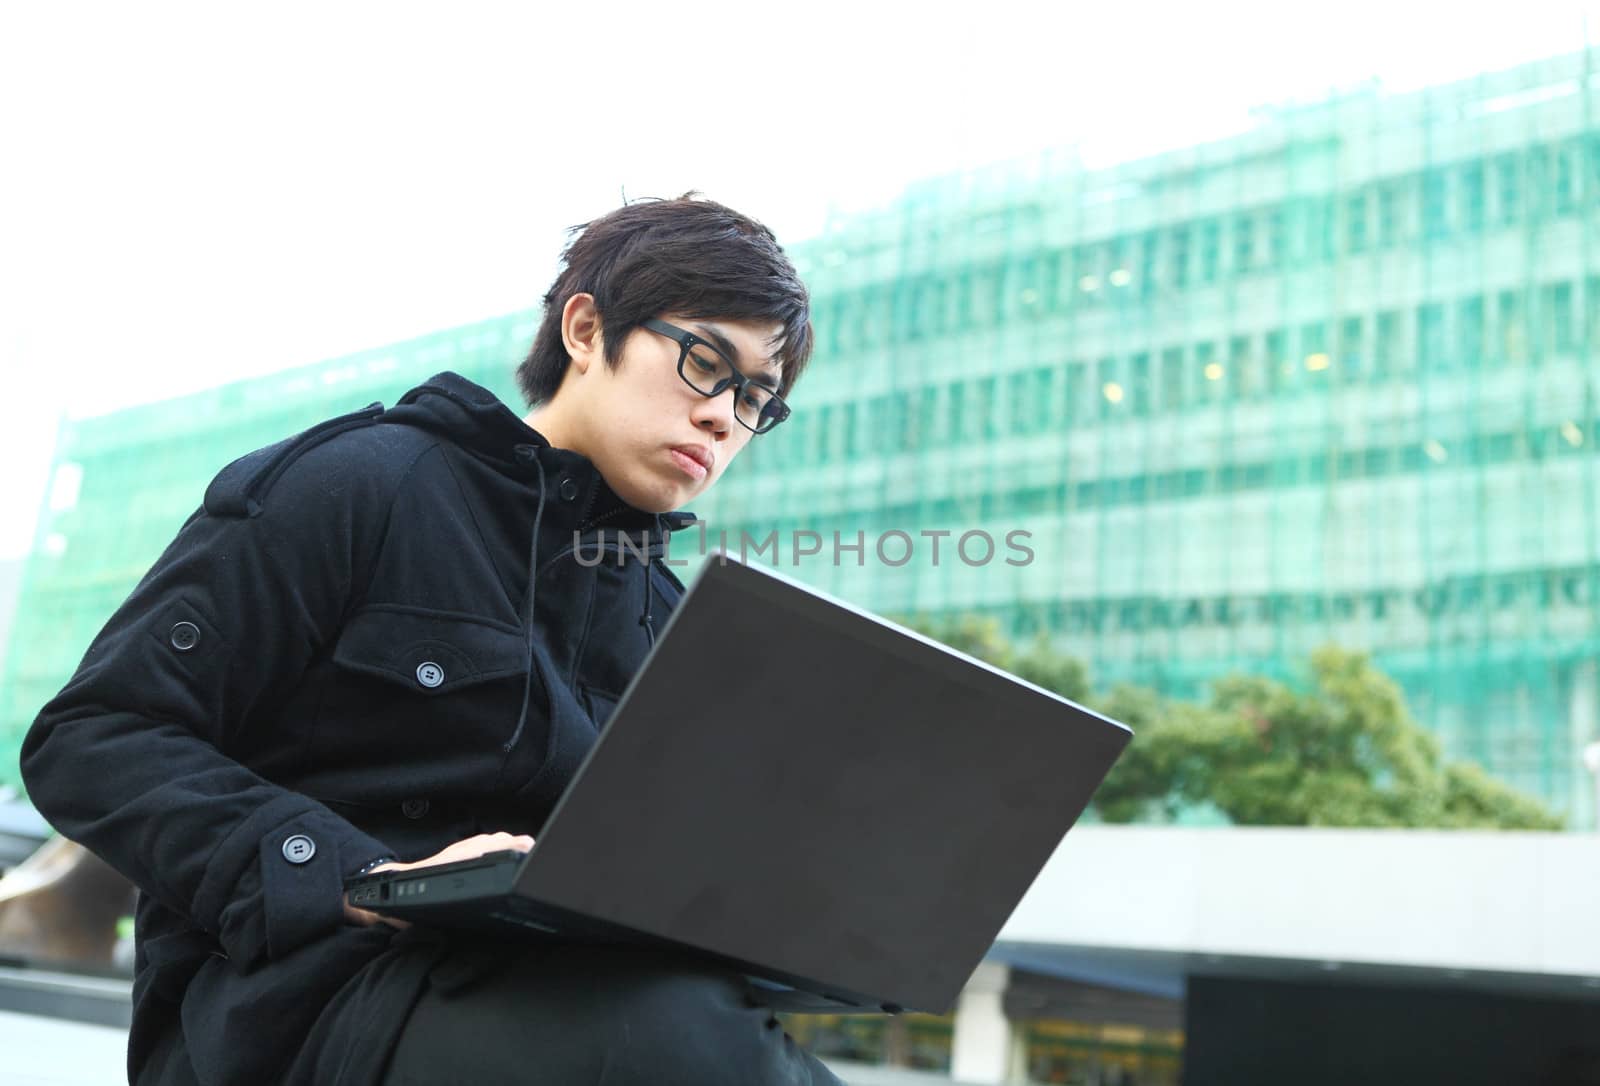 man using computer outdoor by leungchopan